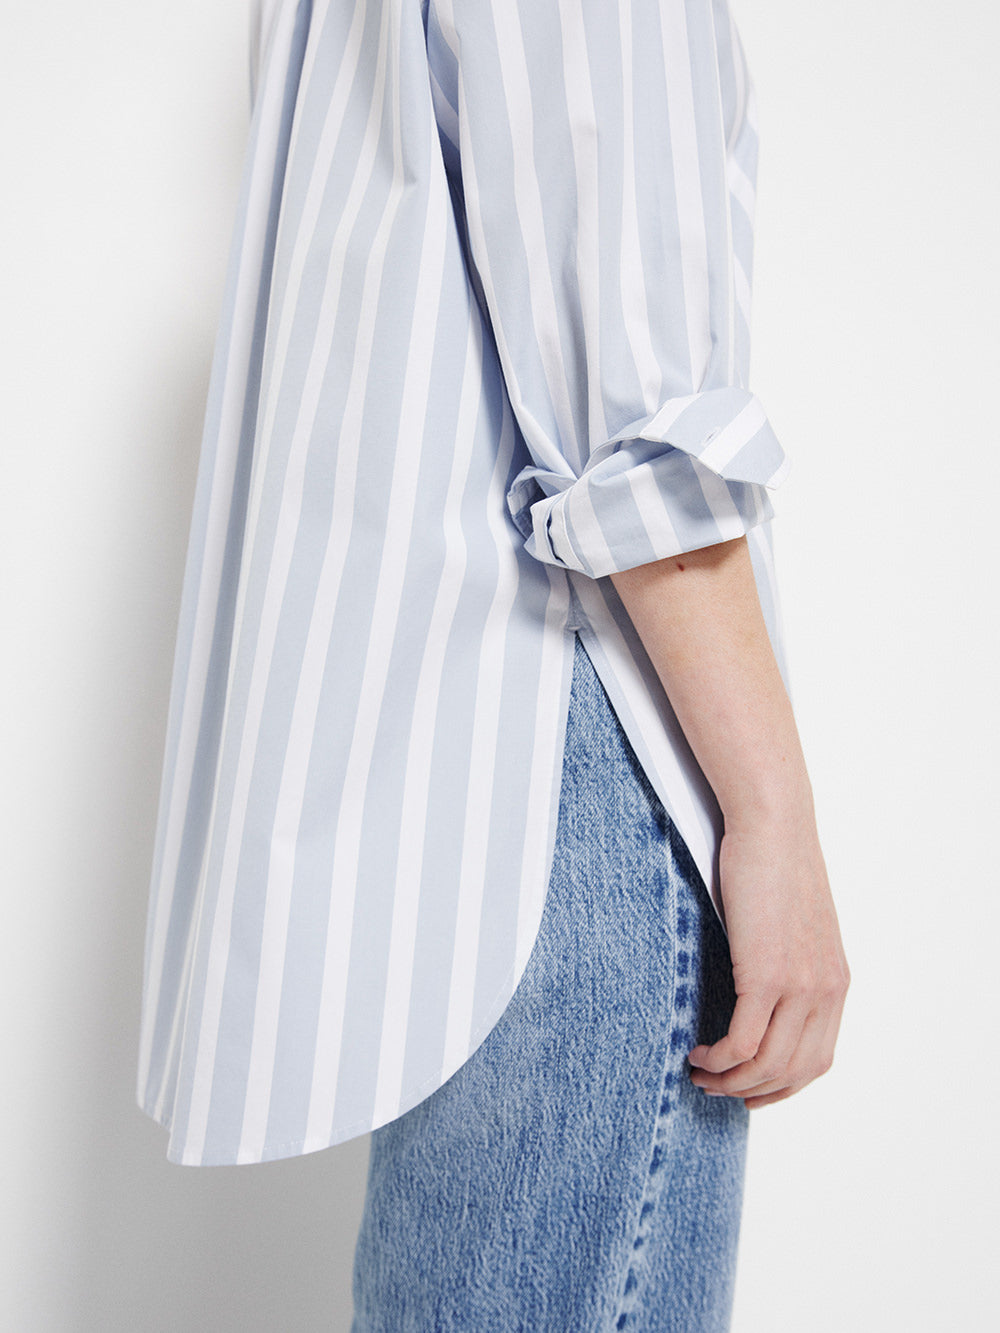 The Common Standard Poplin Stripe Shirt